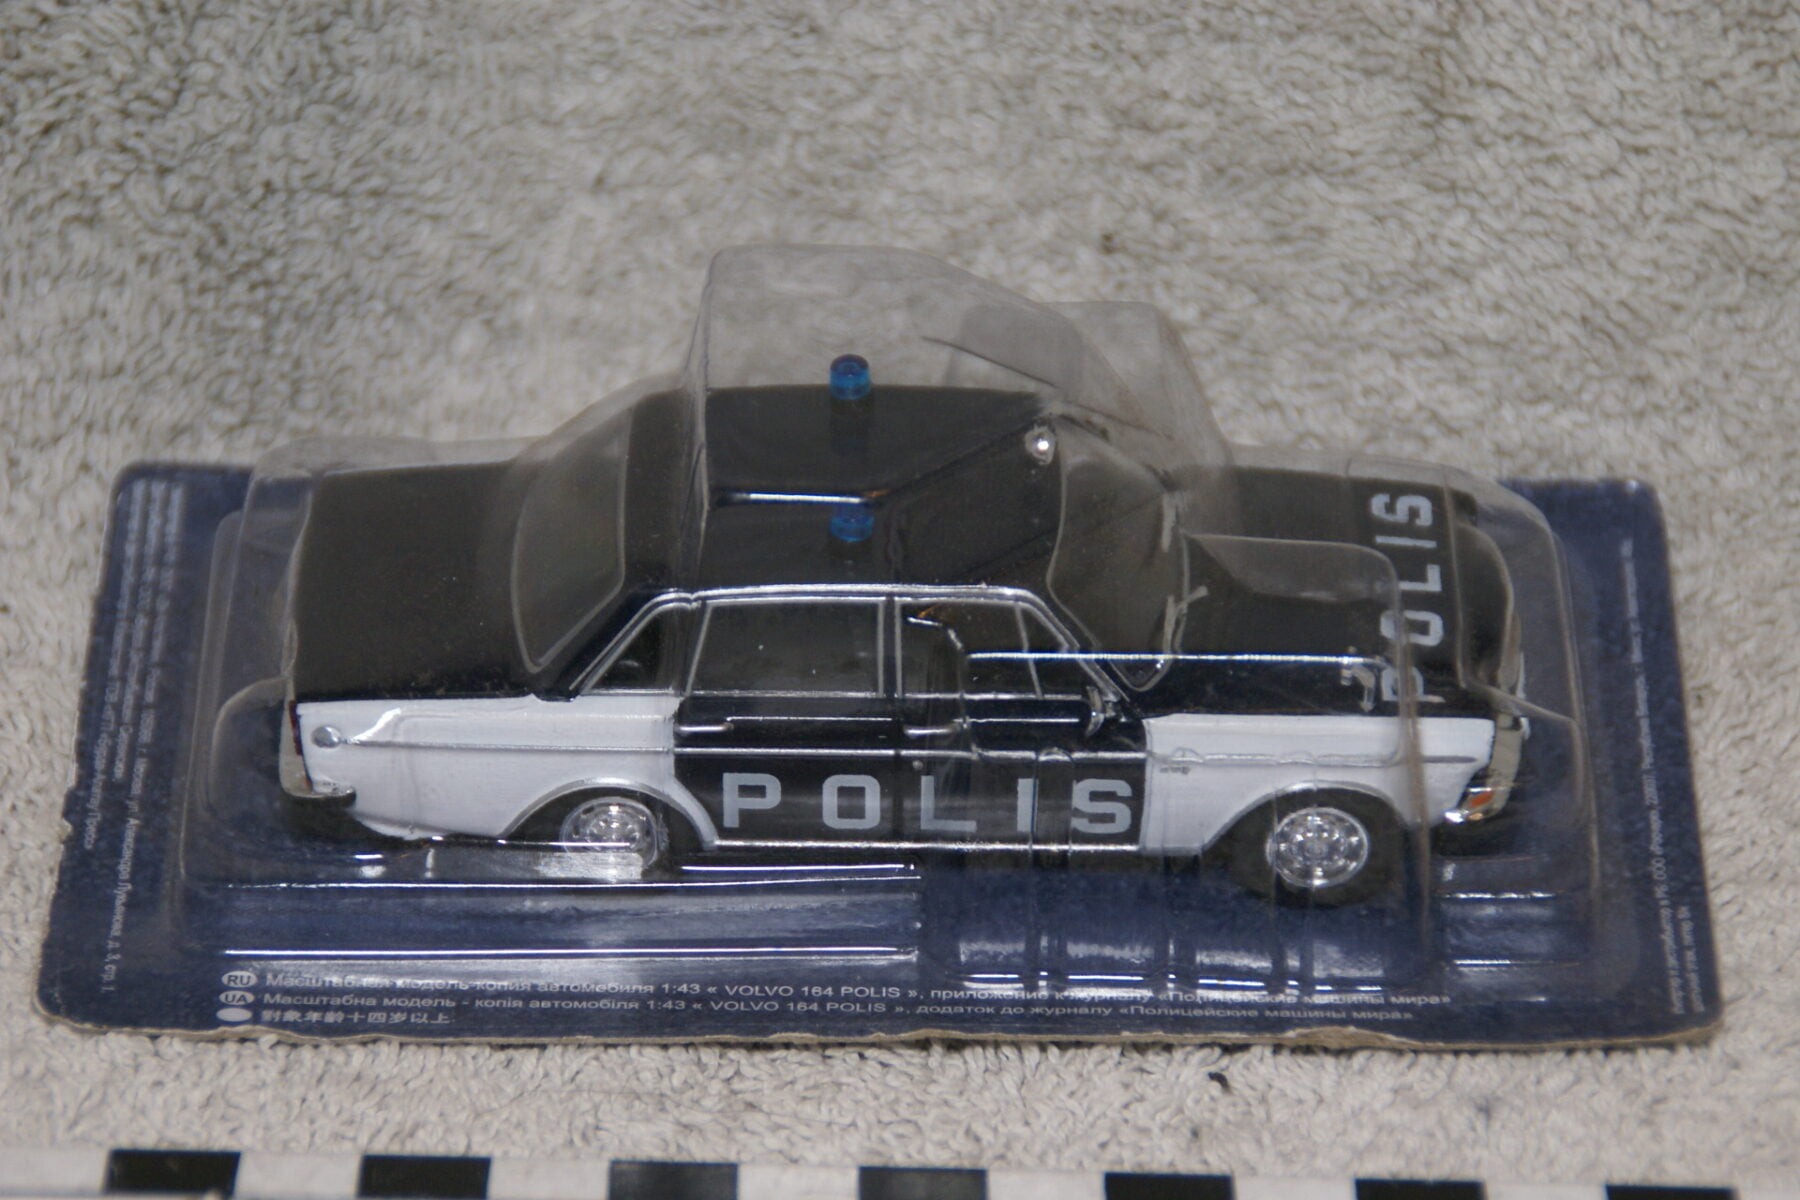 DSC07392 miniatuur Volvo 164 polis 1op43 MB